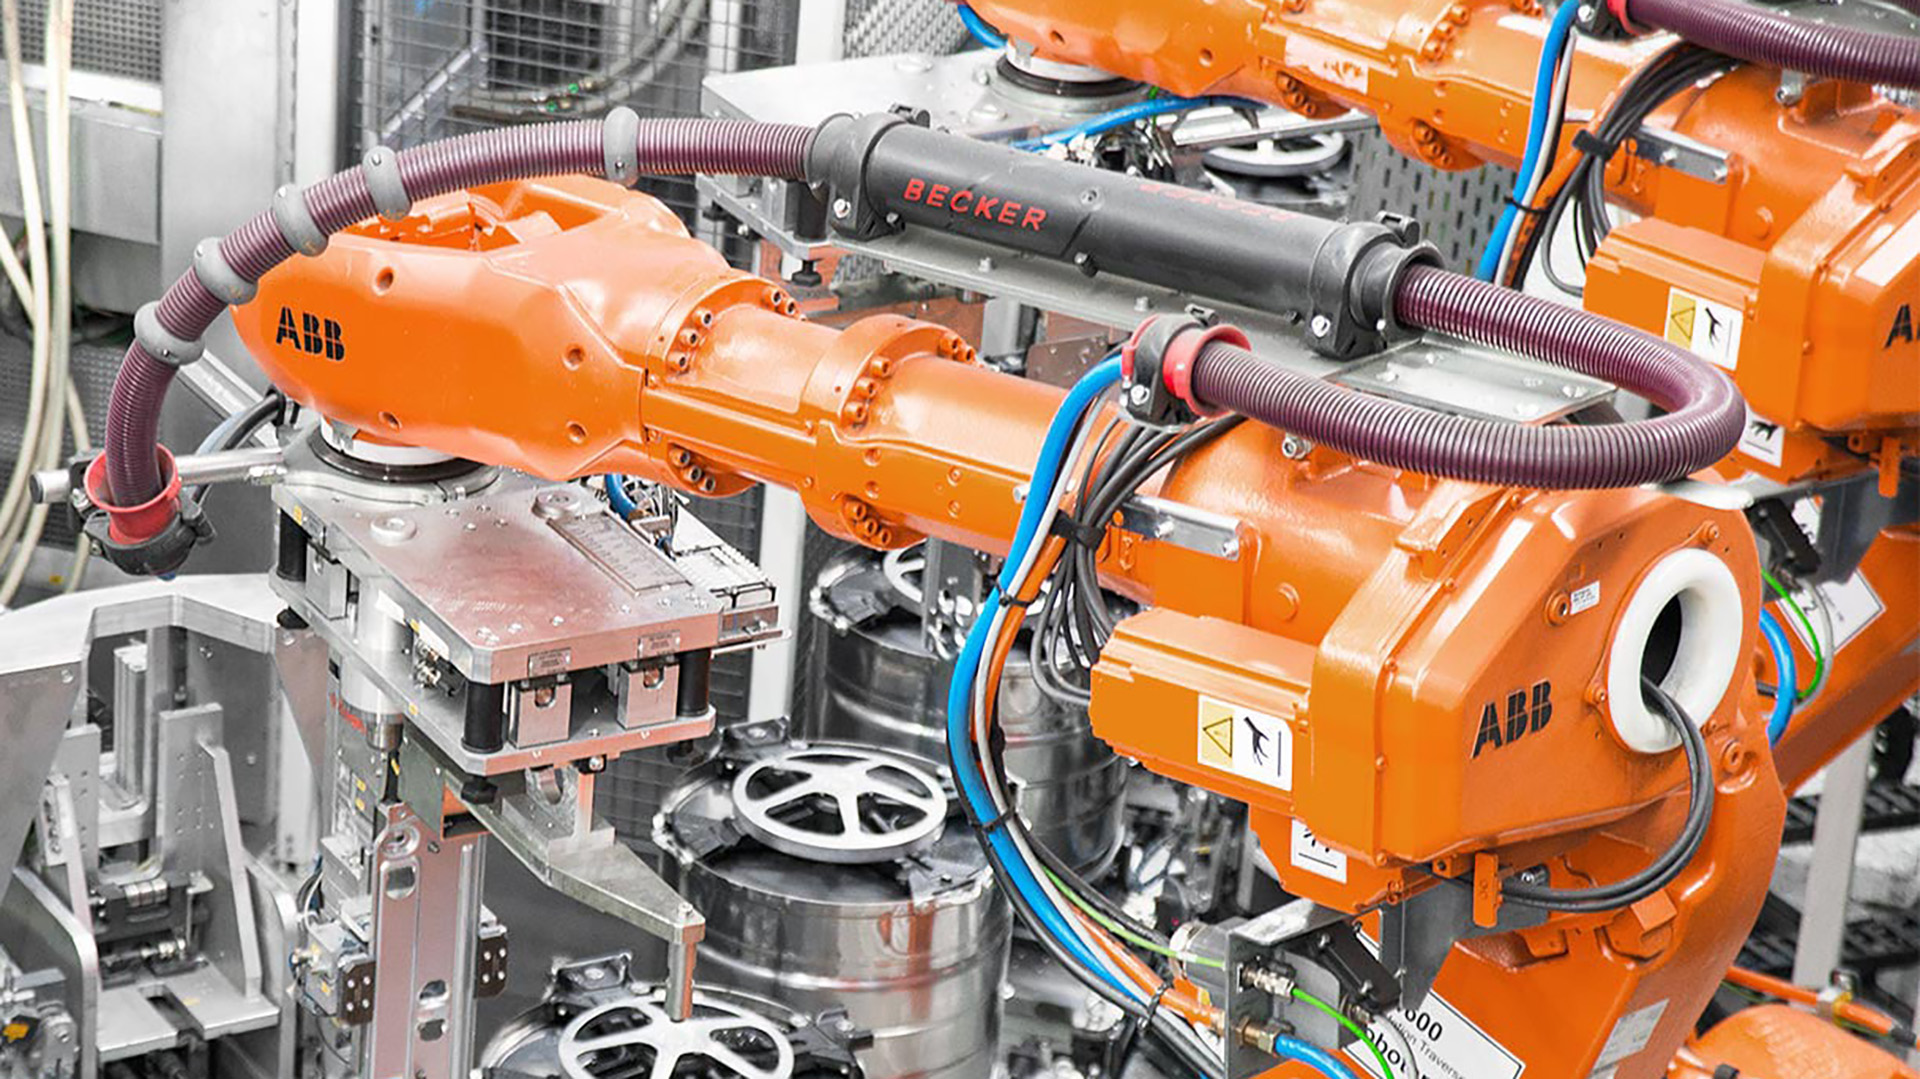 Robot Equipment / Becker Robotic Equipment